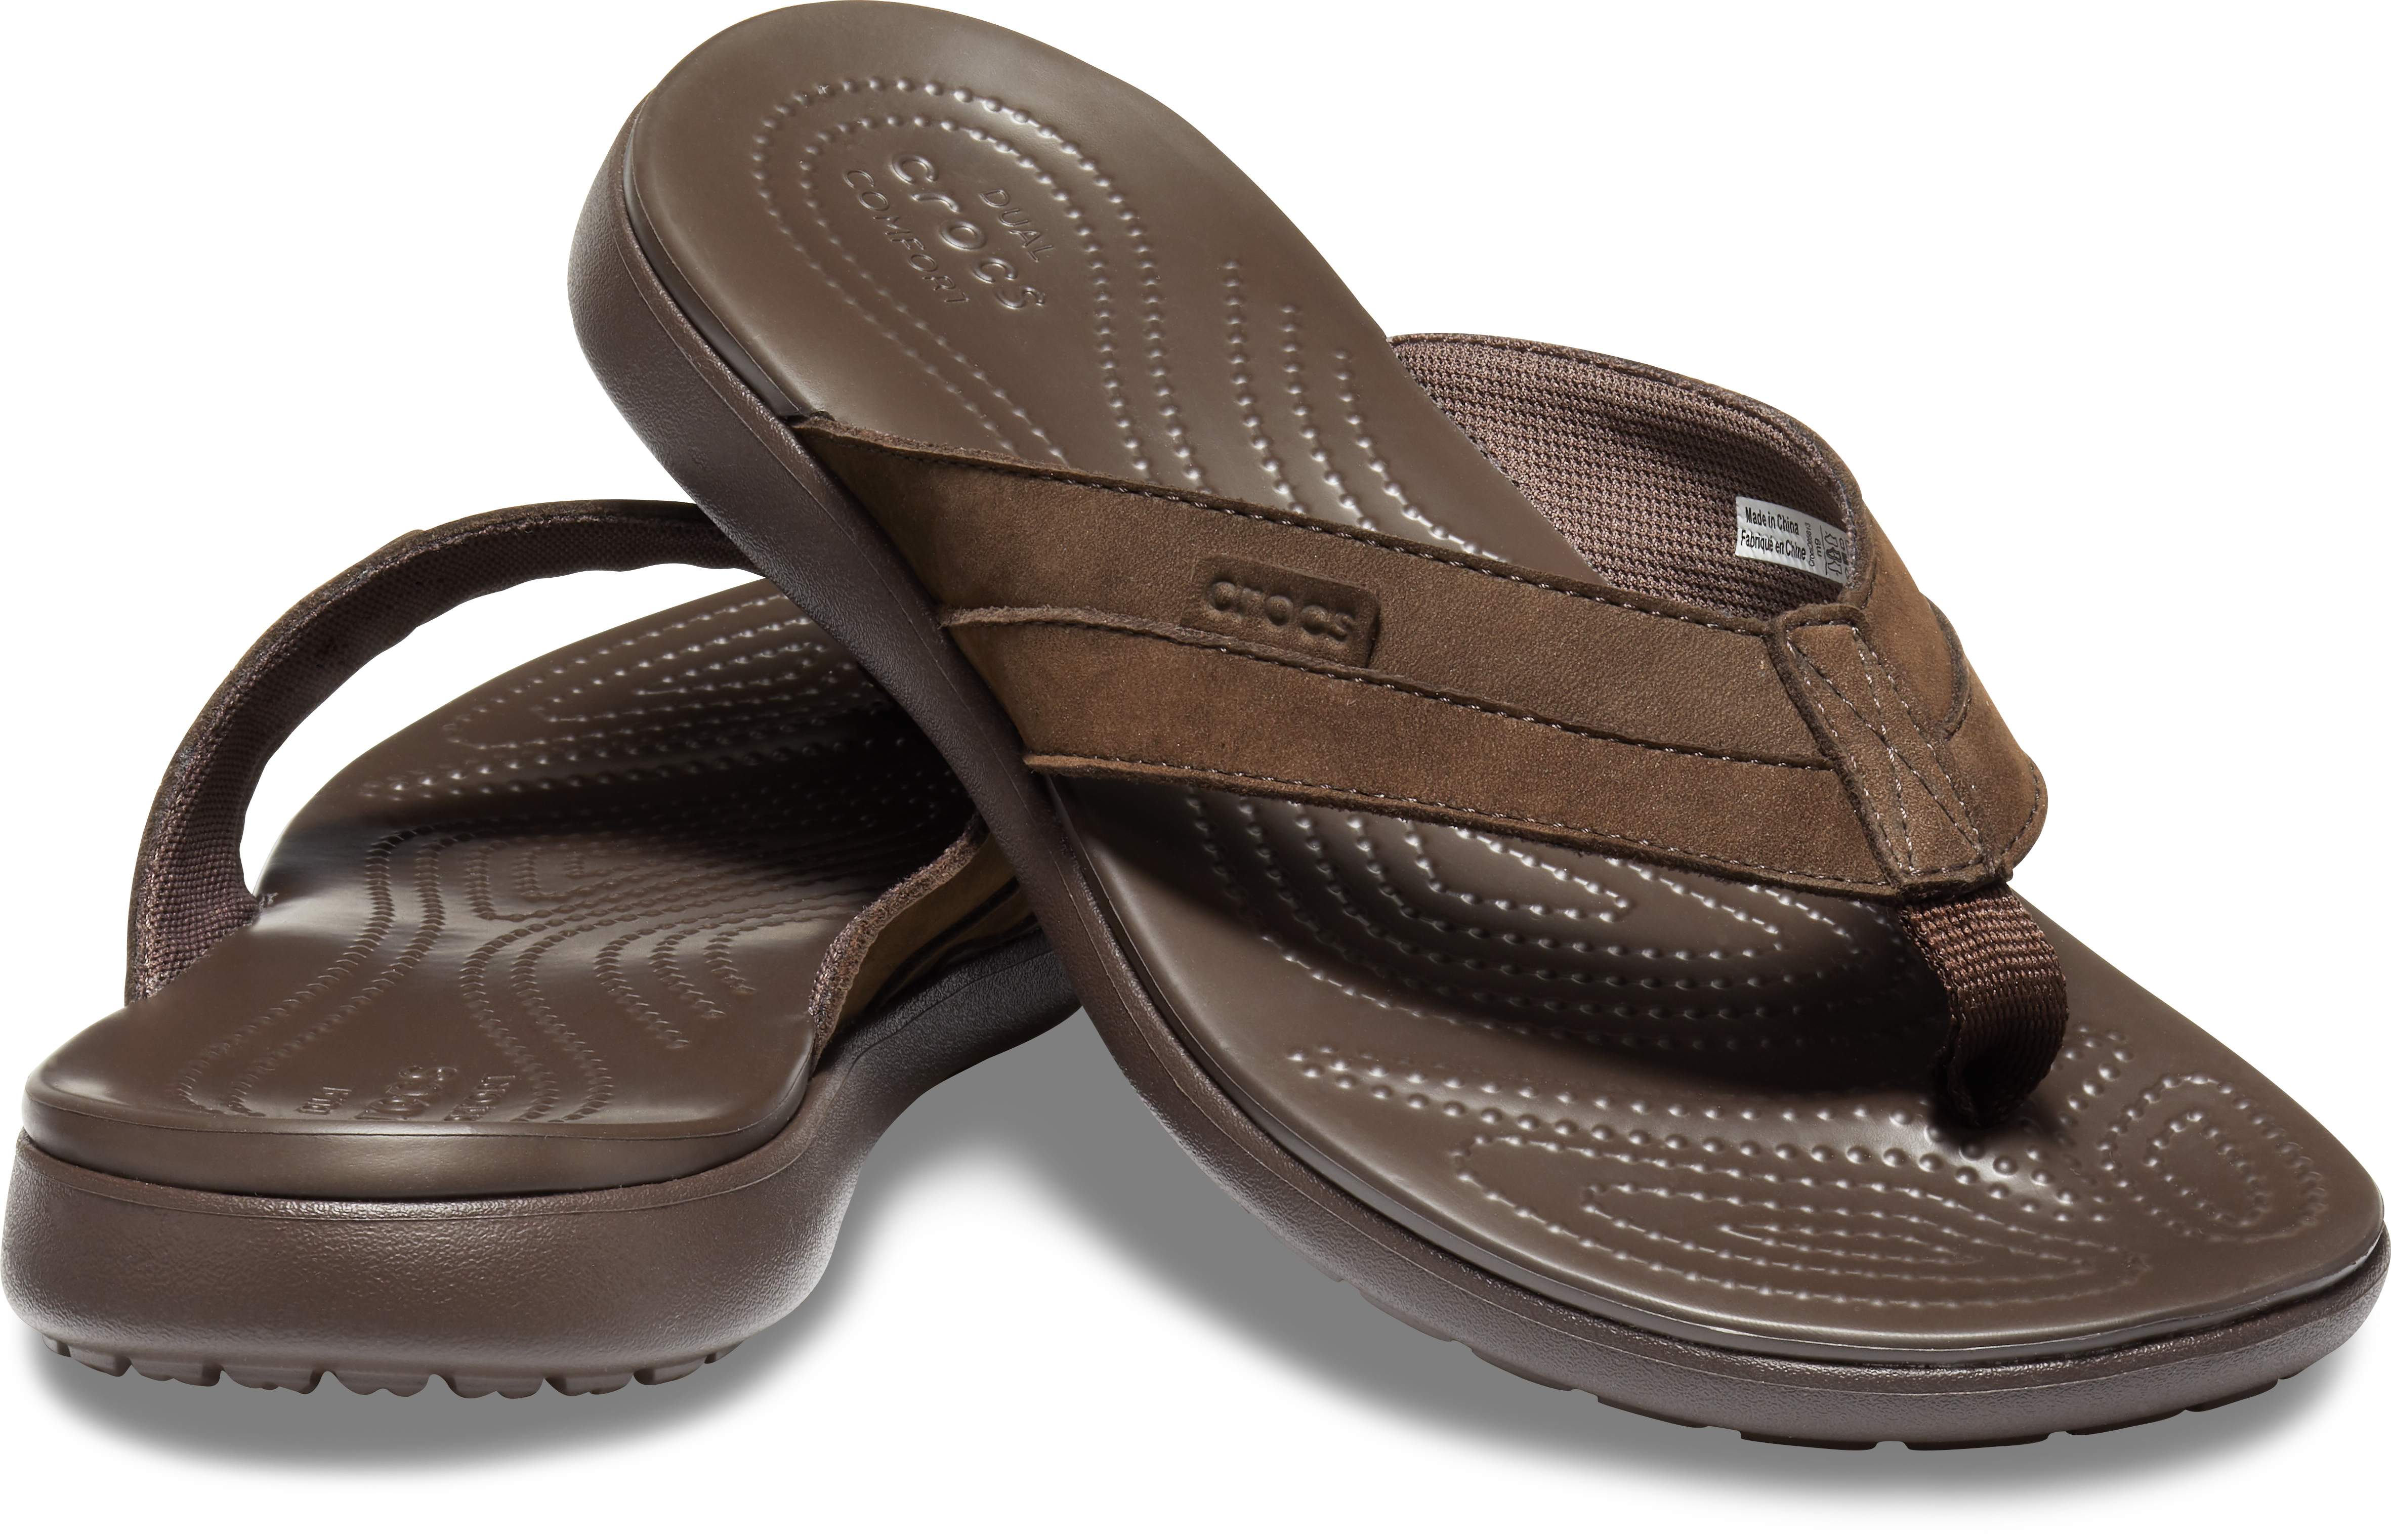 crocs santa cruz leather flip flops